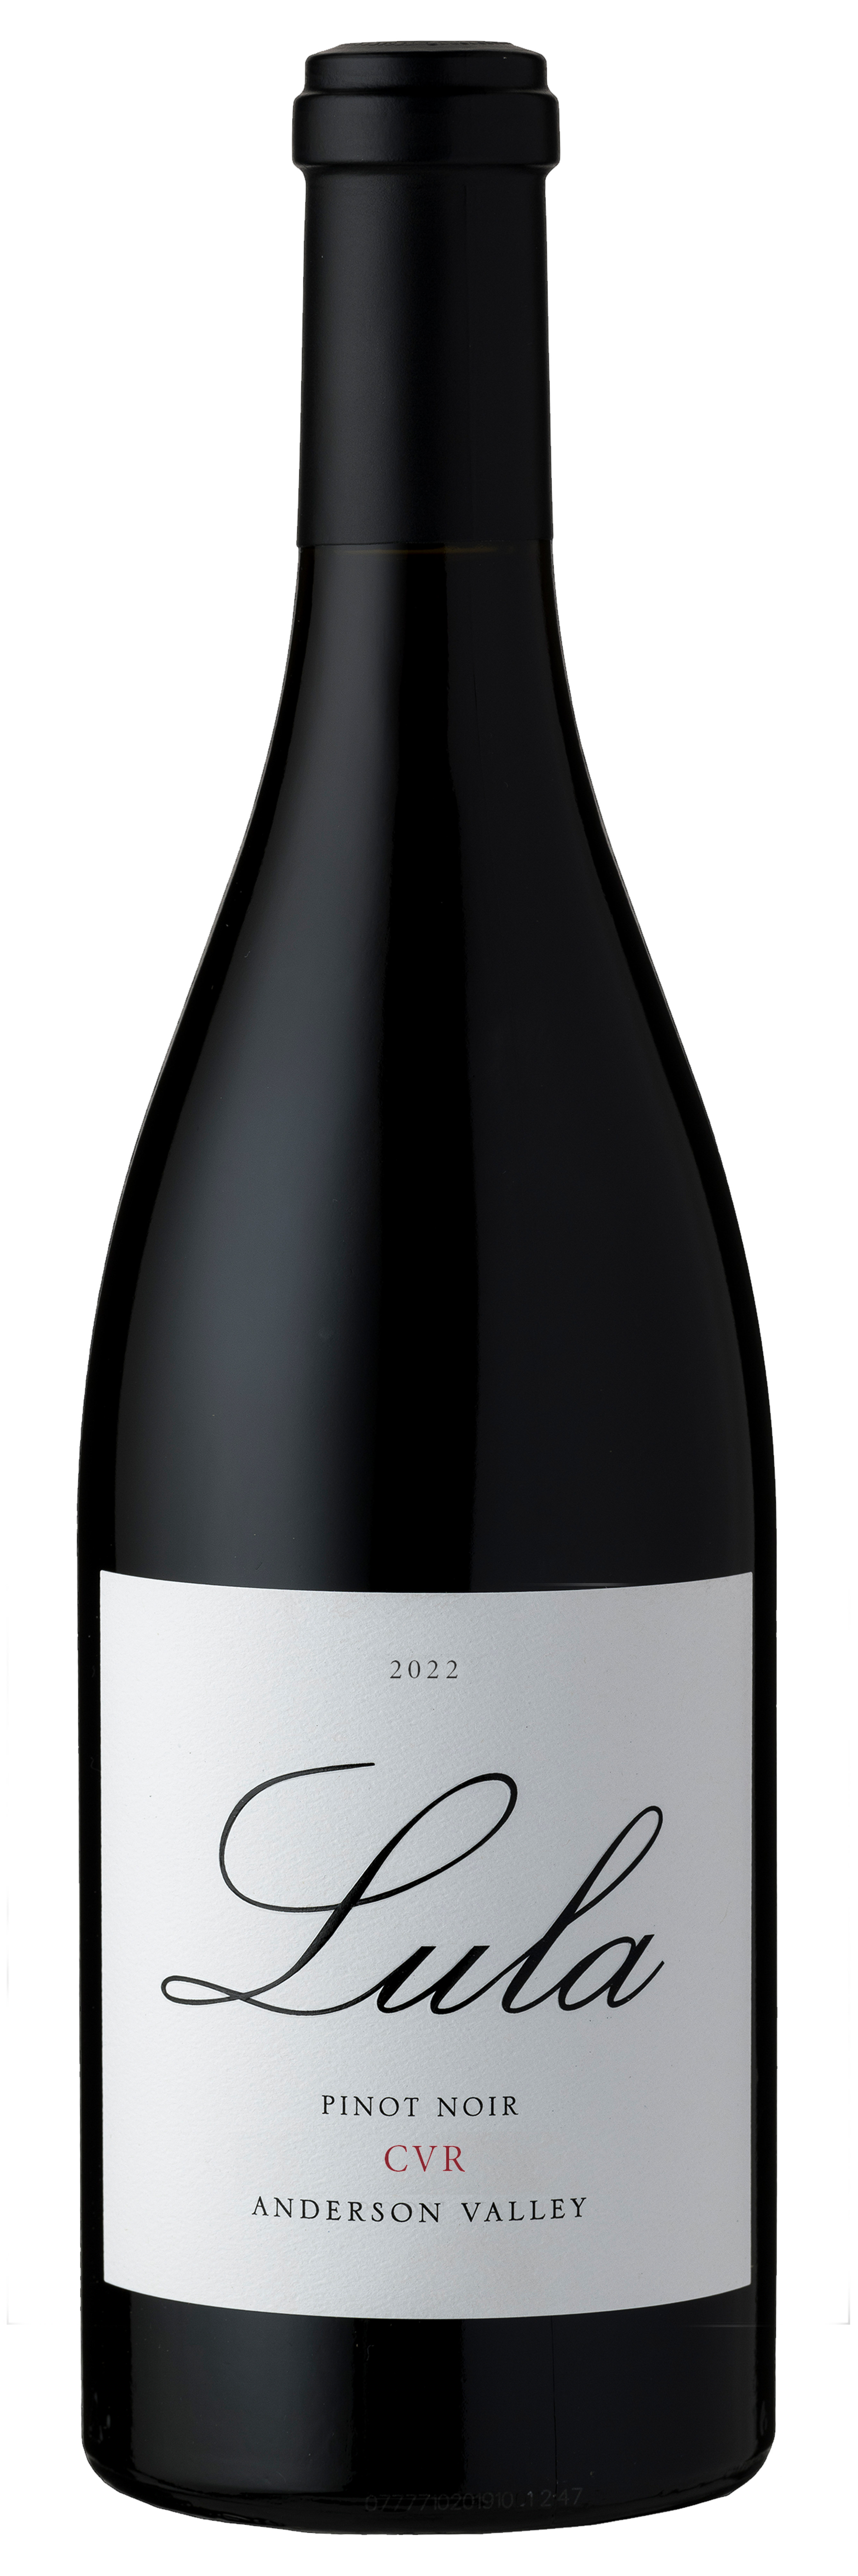 Product Image for 2022 CVR Pinot Noir